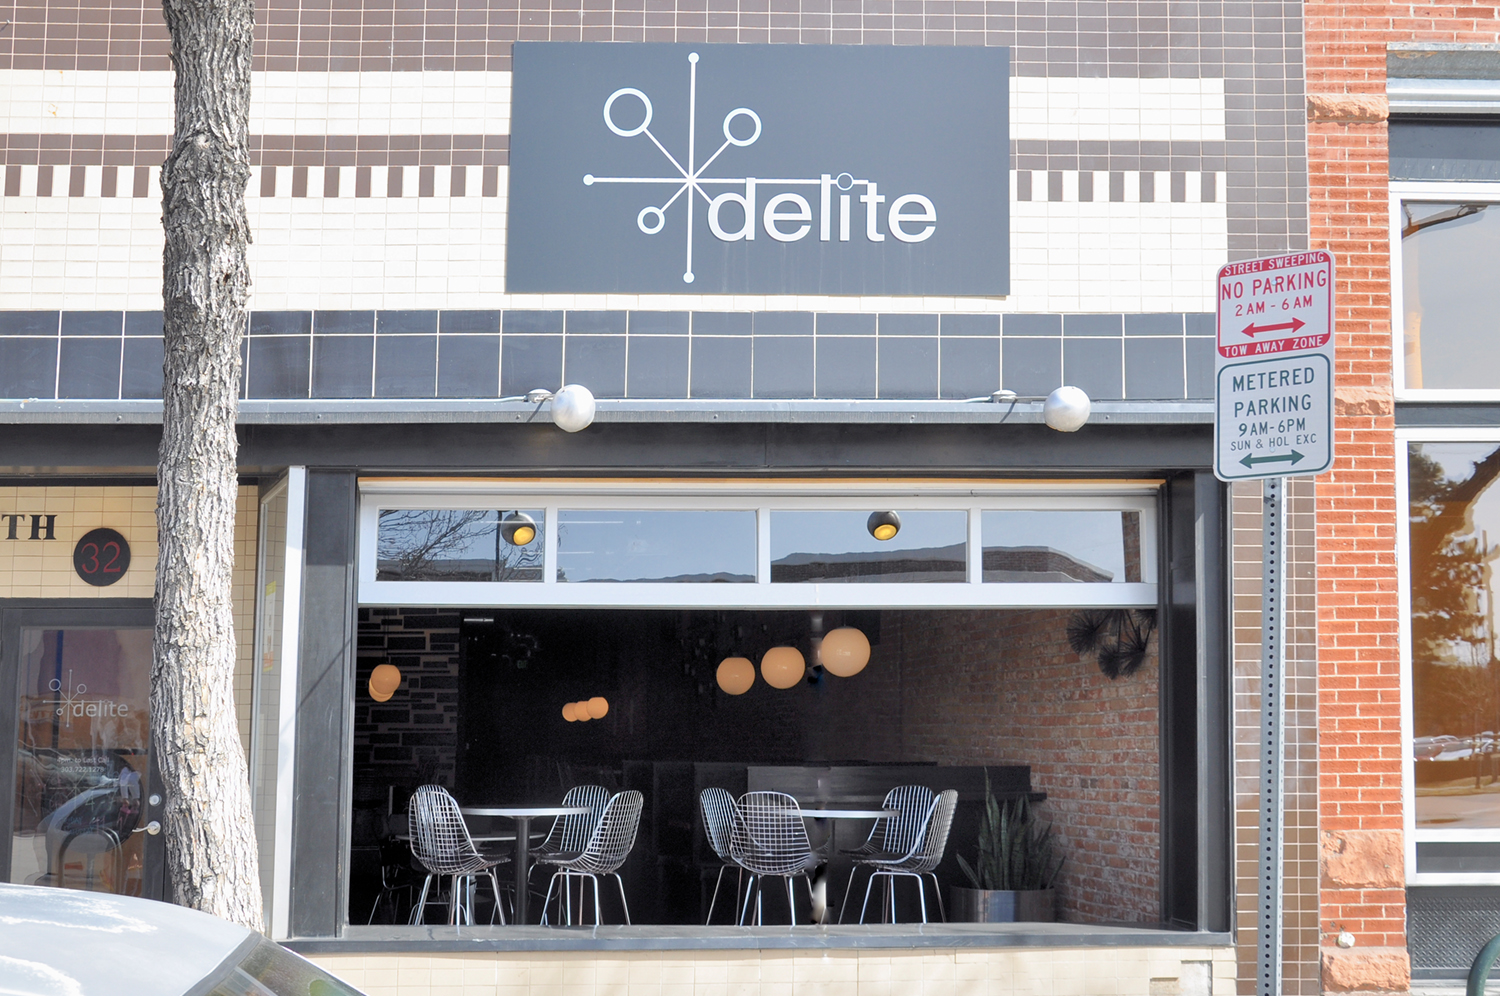 Delite Restaurant: Commercial Interior Design